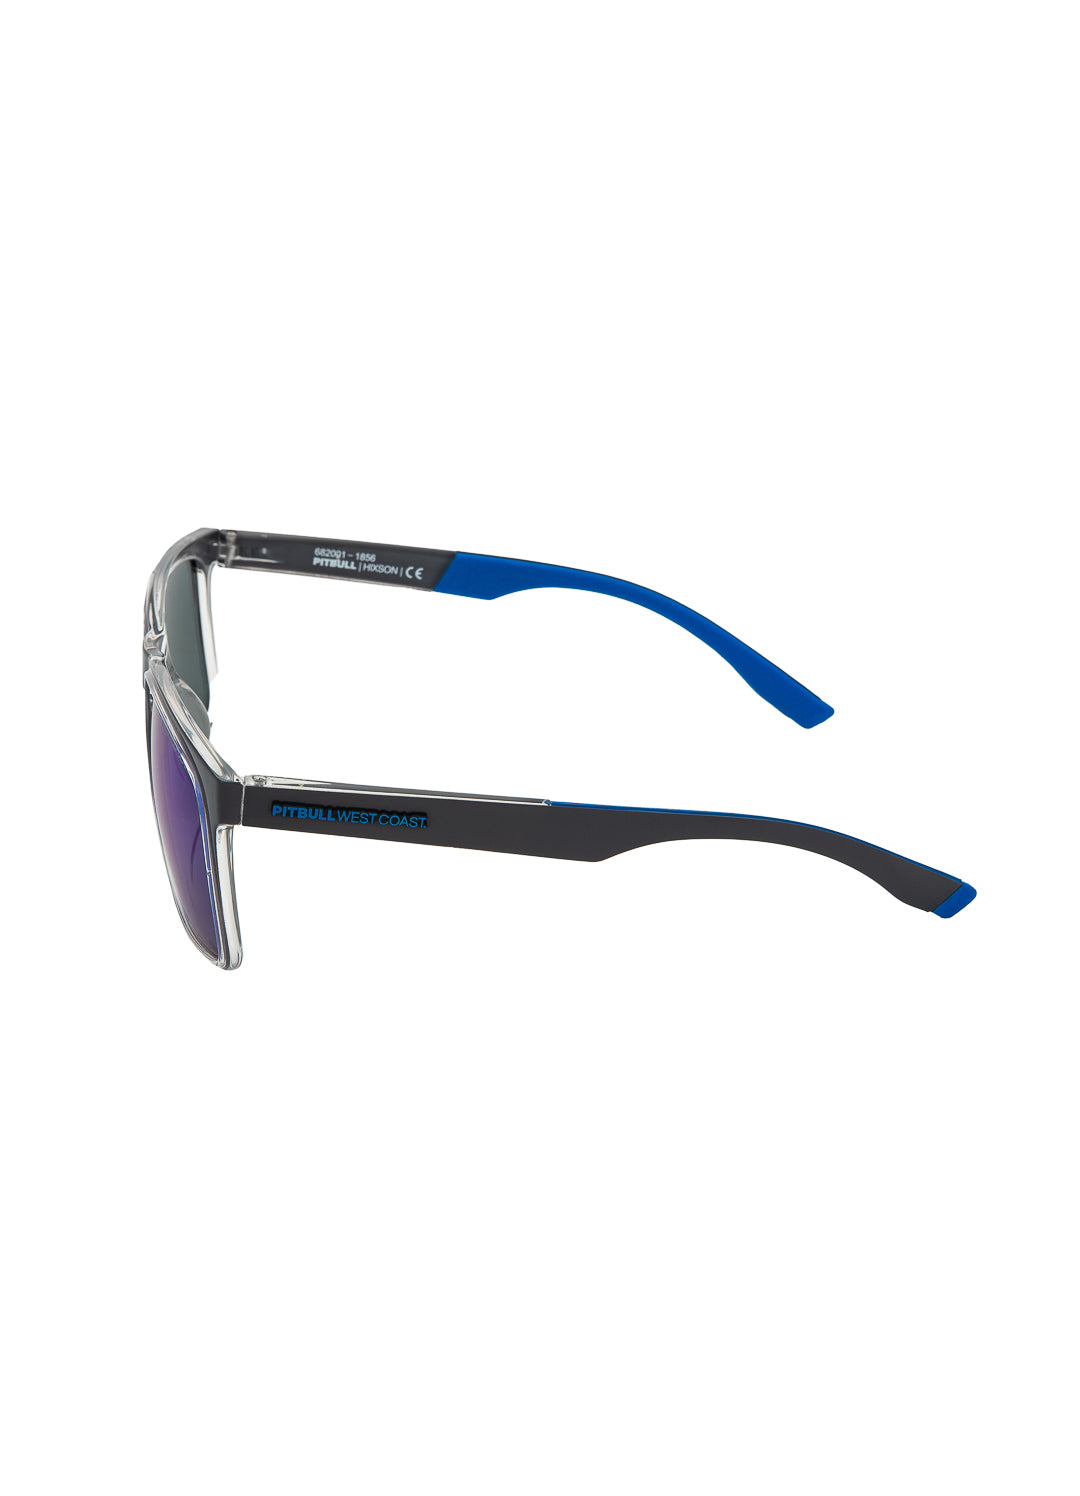 Sunglasses HIXSON Grey/Blue - Pitbull West Coast International Store 